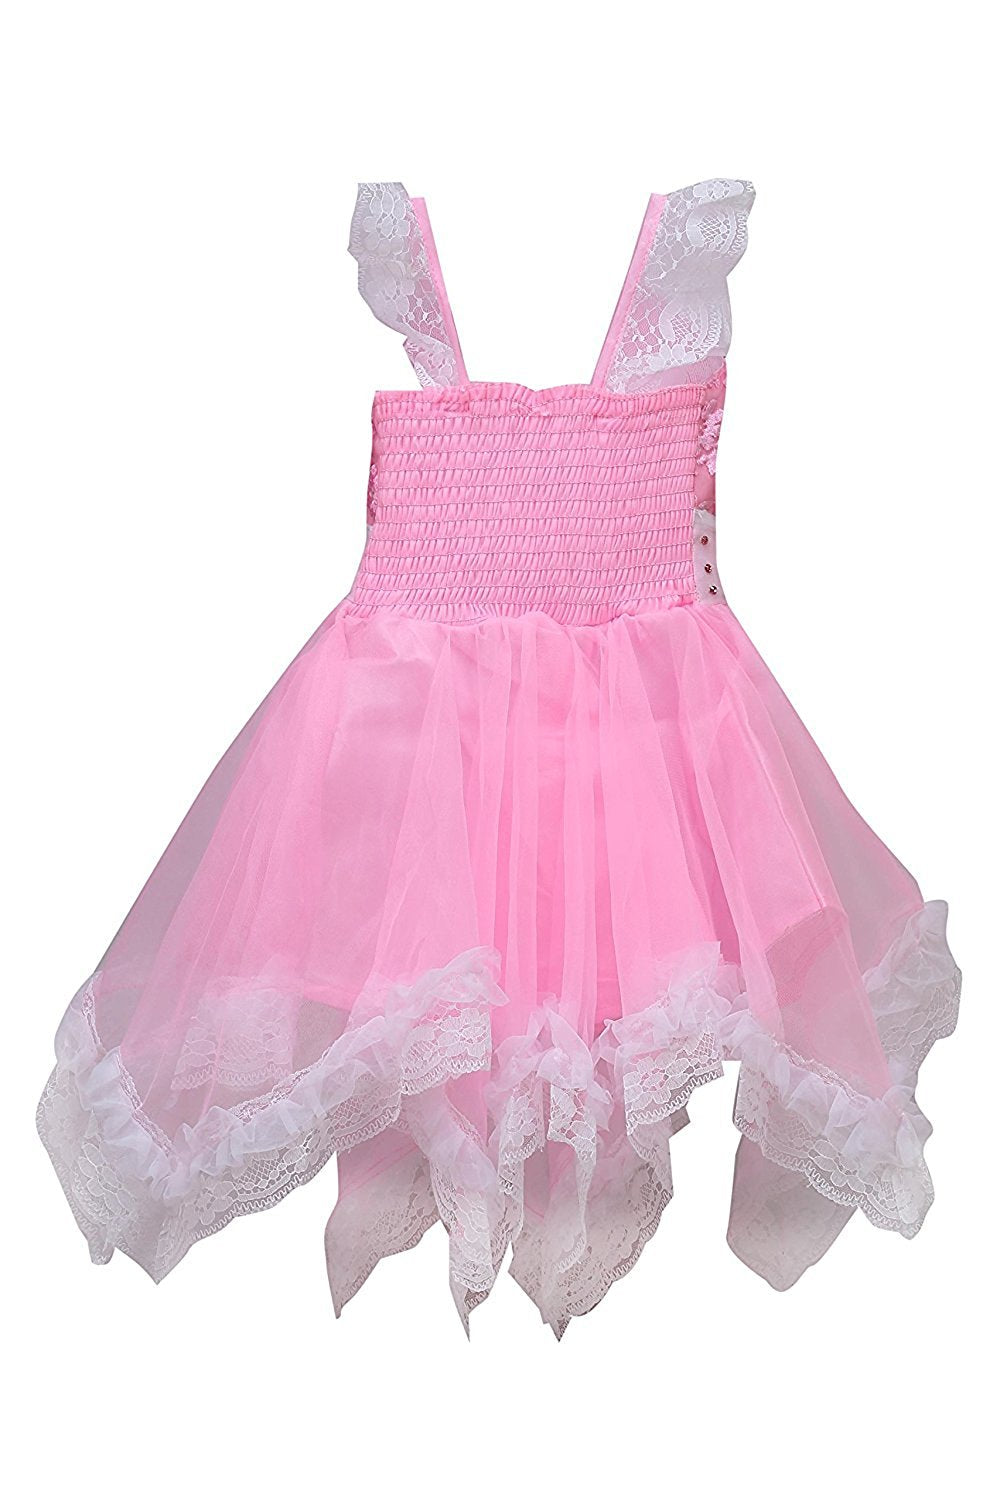 Baby Girls Party wear frock dress DN089p - Wish Karo Party Wear - frocks Party Wear - baby dress